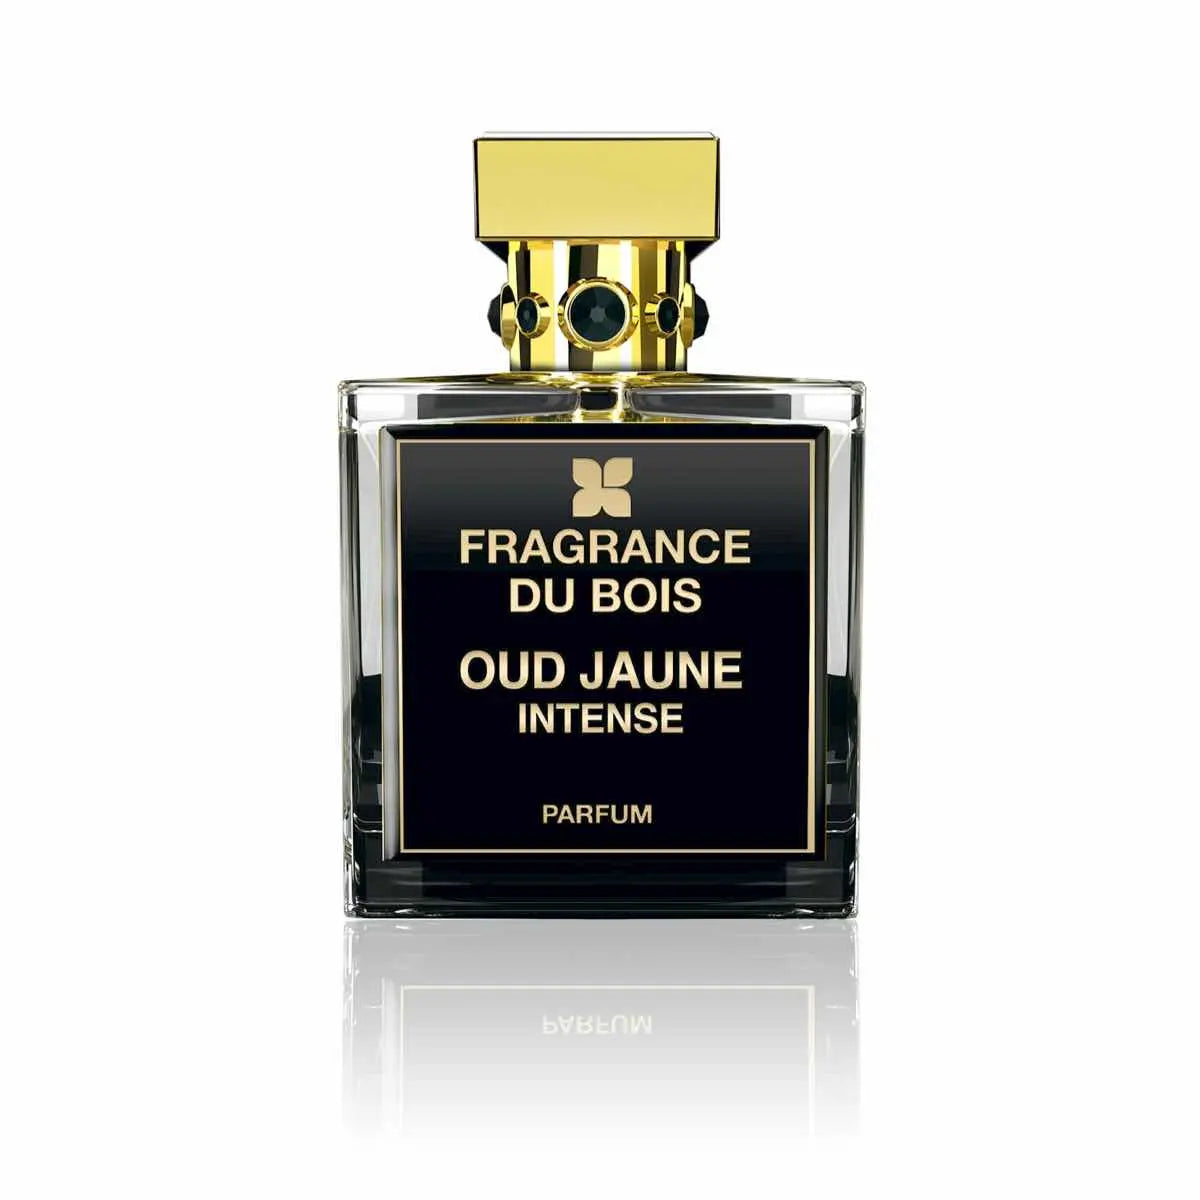 Fragrance du bois Oud Jaune Intense profumo - 50 ml